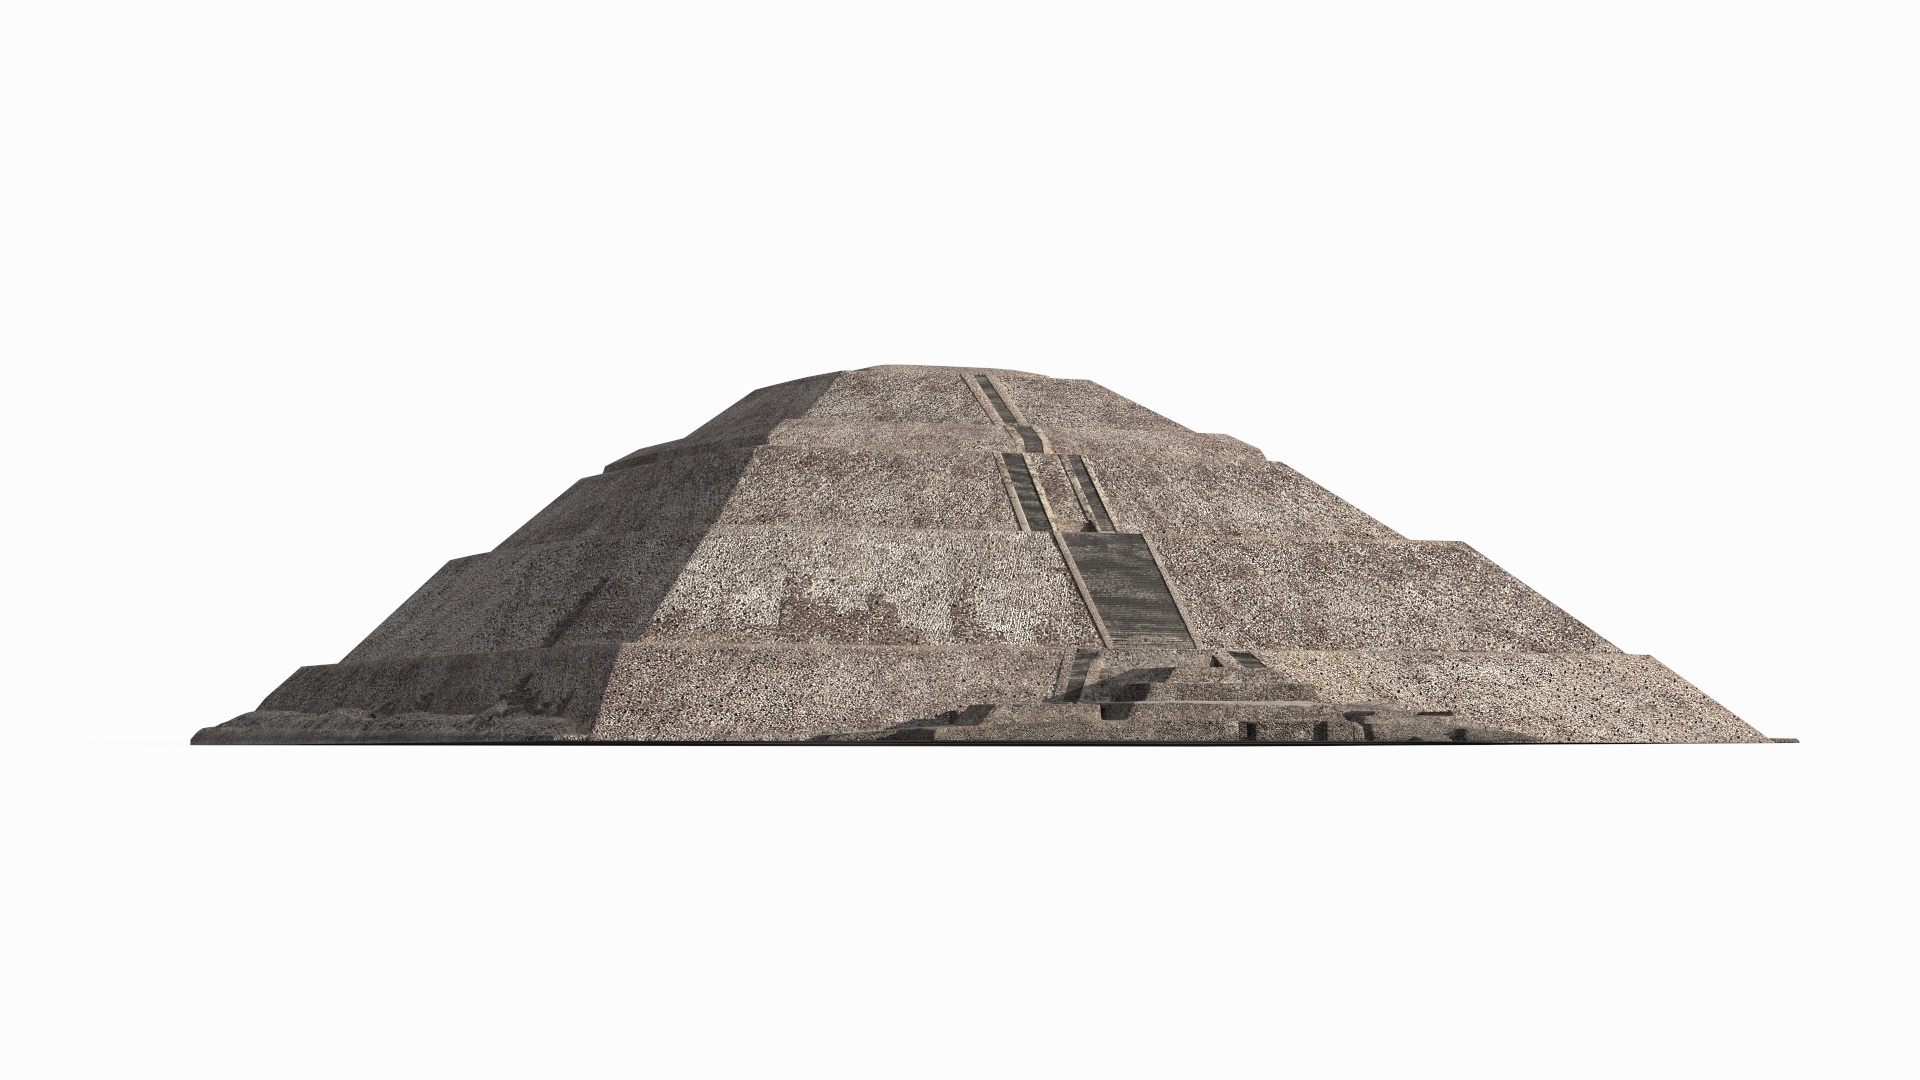 Teotihuacan Pyramid of the Sun 3D model https://p.turbosquid.com/ts-thumb/H1/rMczOv/OR/teotihuacan_pyramid_of_the_sun_360/jpg/1680331998/1920x1080/turn_fit_q99/dde36b3e68ff716bc9e188c3038b471ea06d3f6c/teotihuacan_pyramid_of_the_sun_360-1.jpg